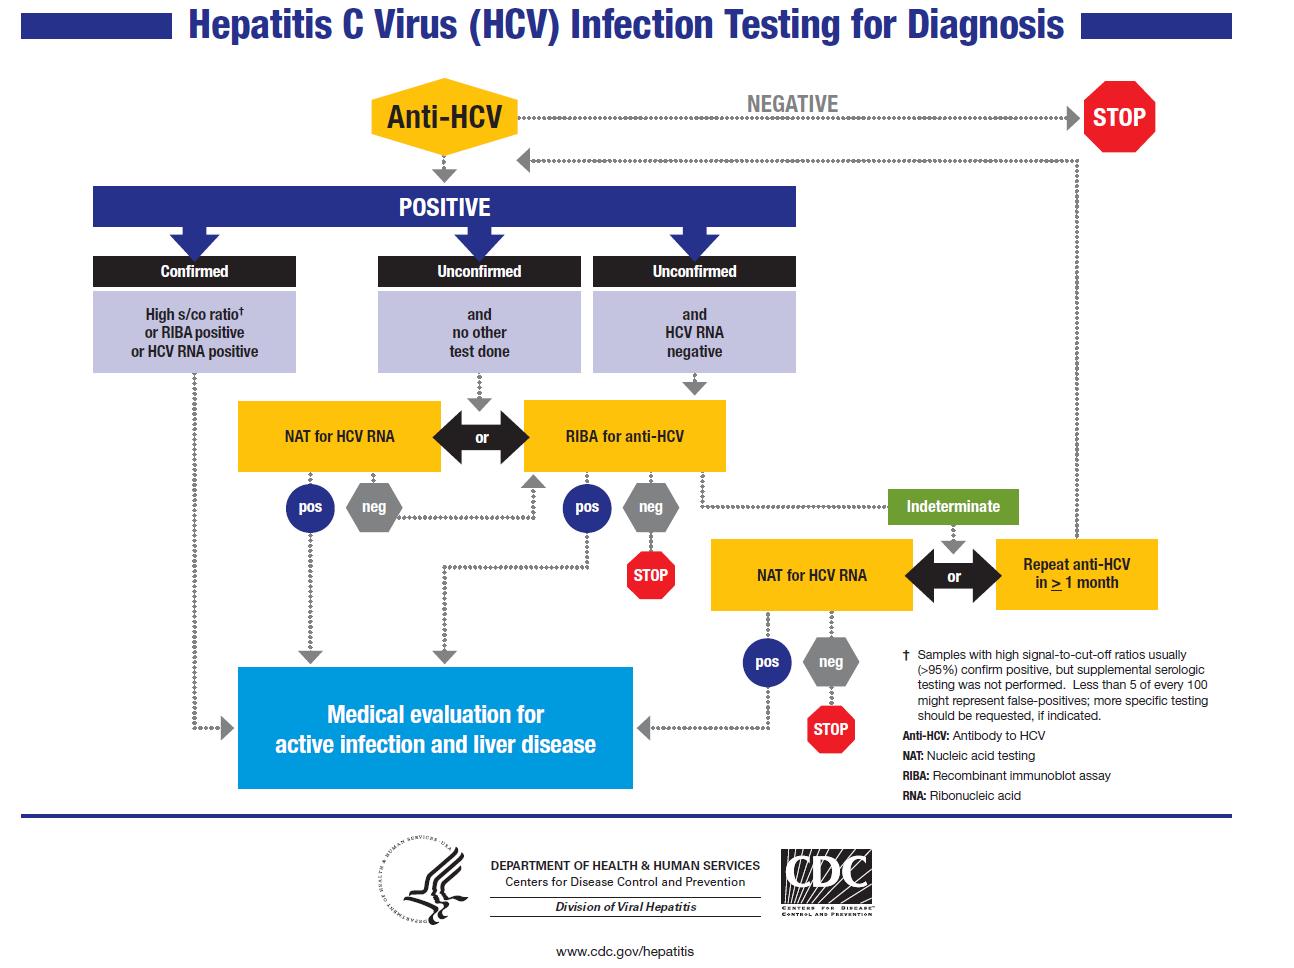 File:HCV infection diagnosis.JPG